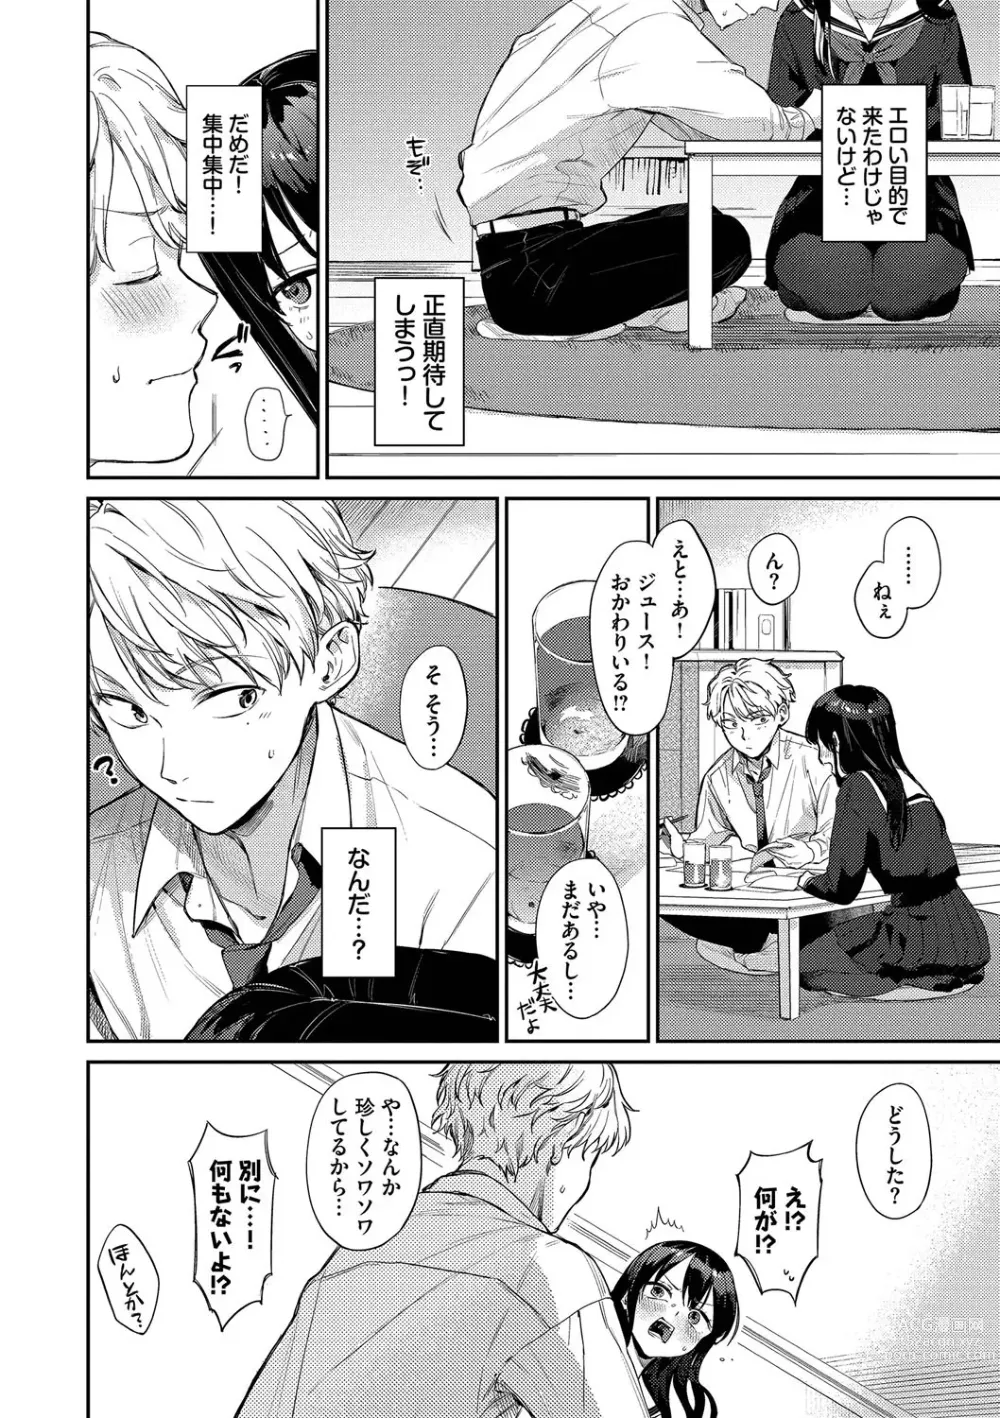 Page 5 of manga Mutsuri Bloom